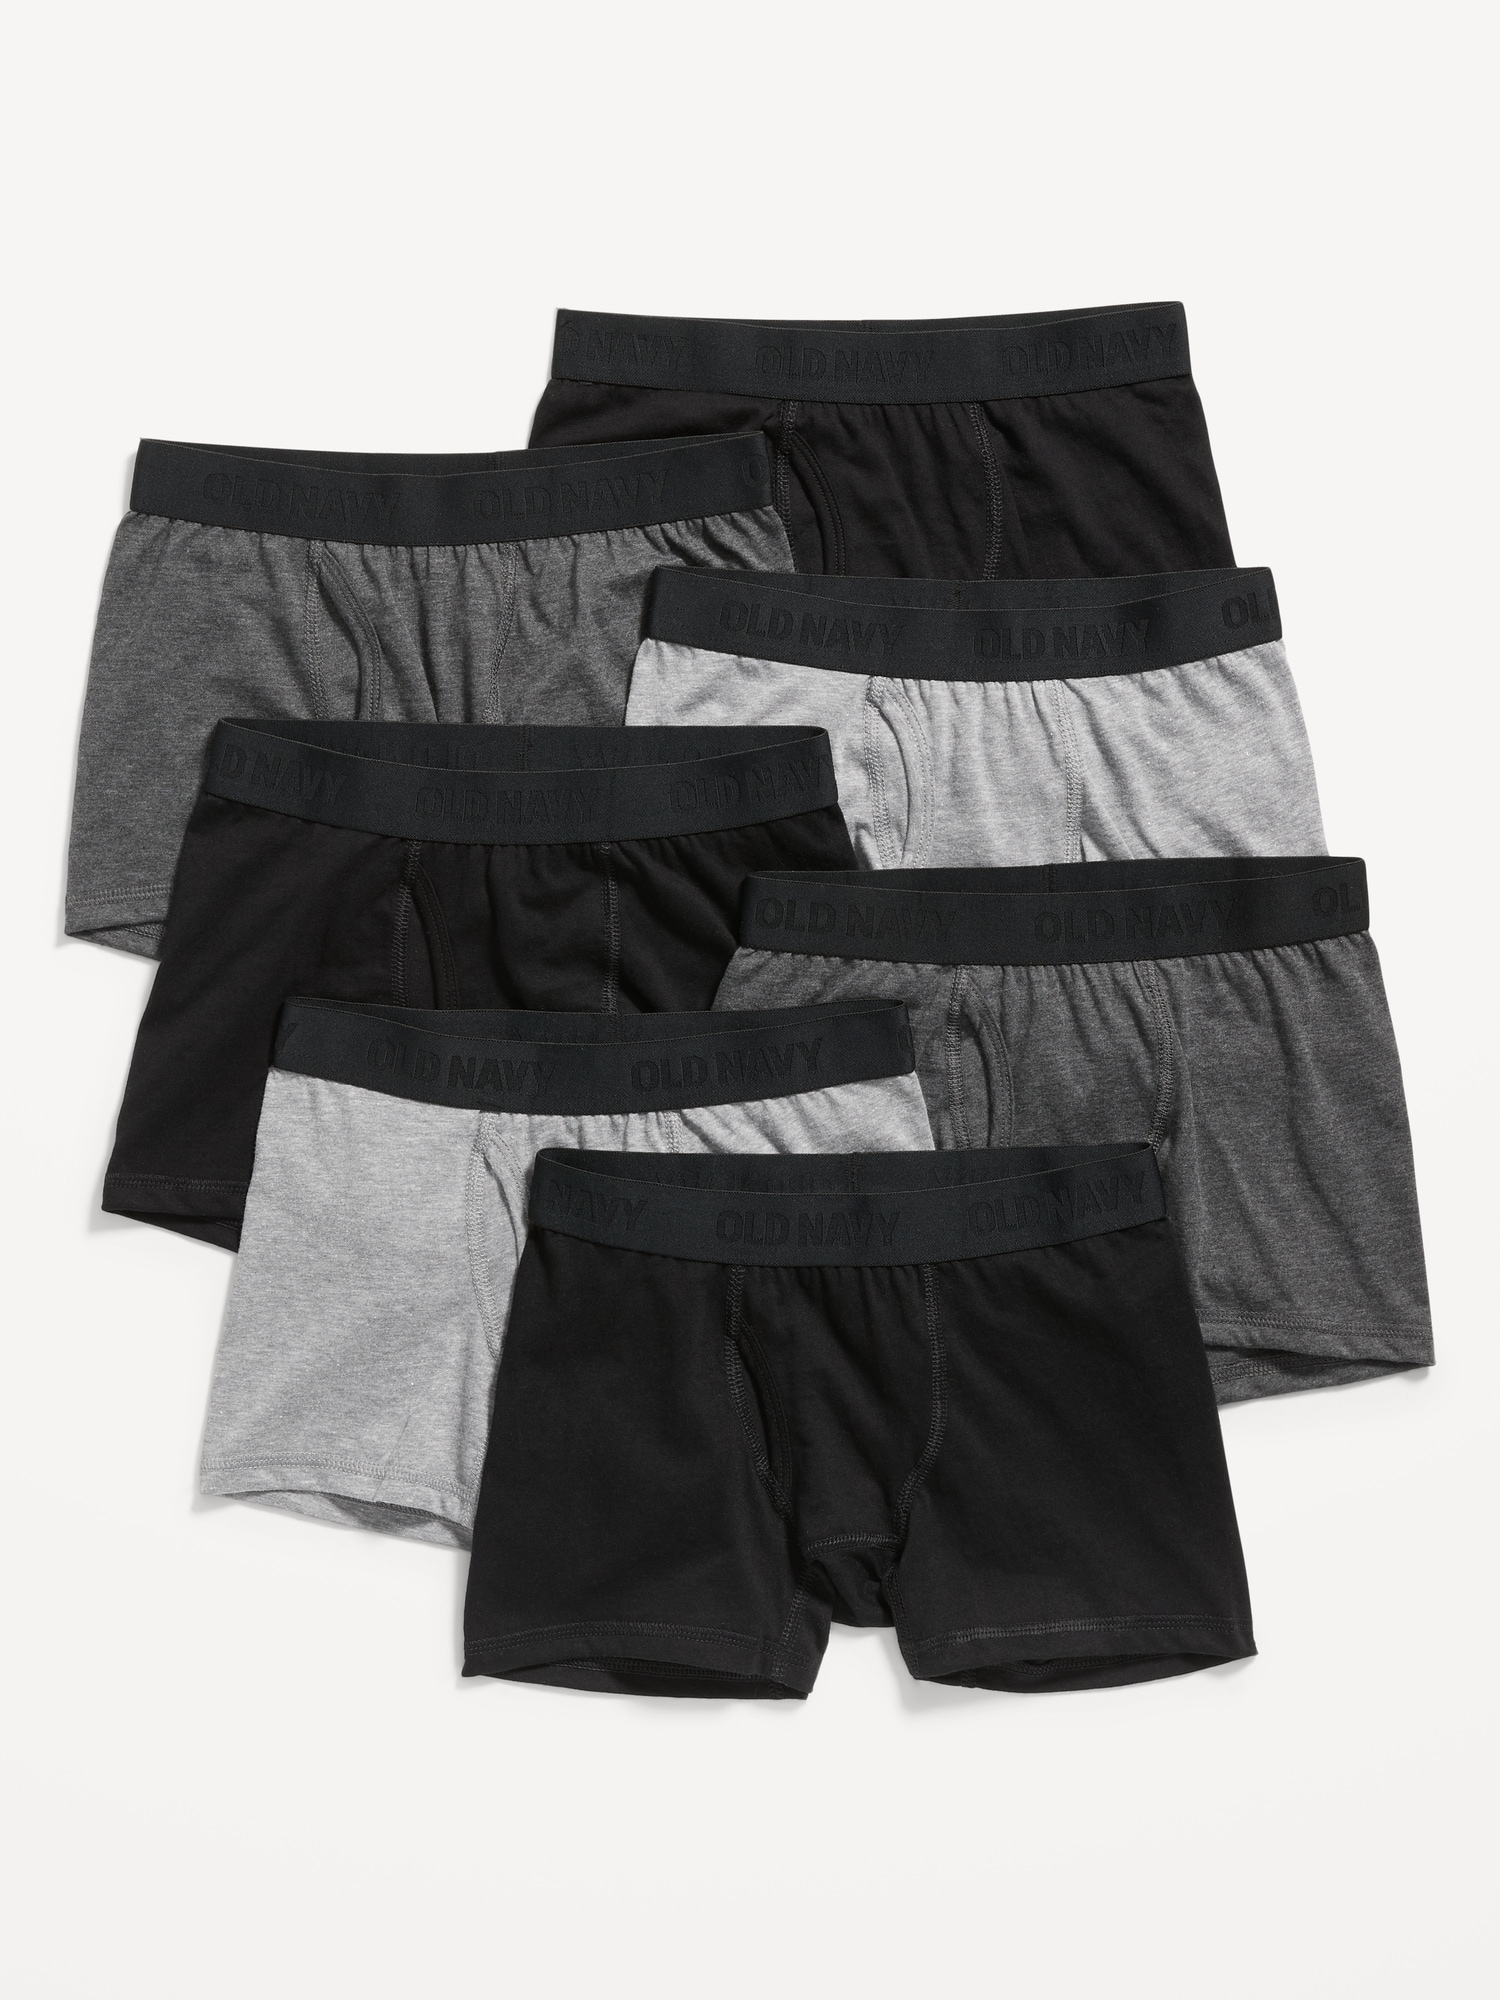 Old Navy Underwear Men's Boxer Shorts Lollipop Hearts MEDIUM 32/34 NEW